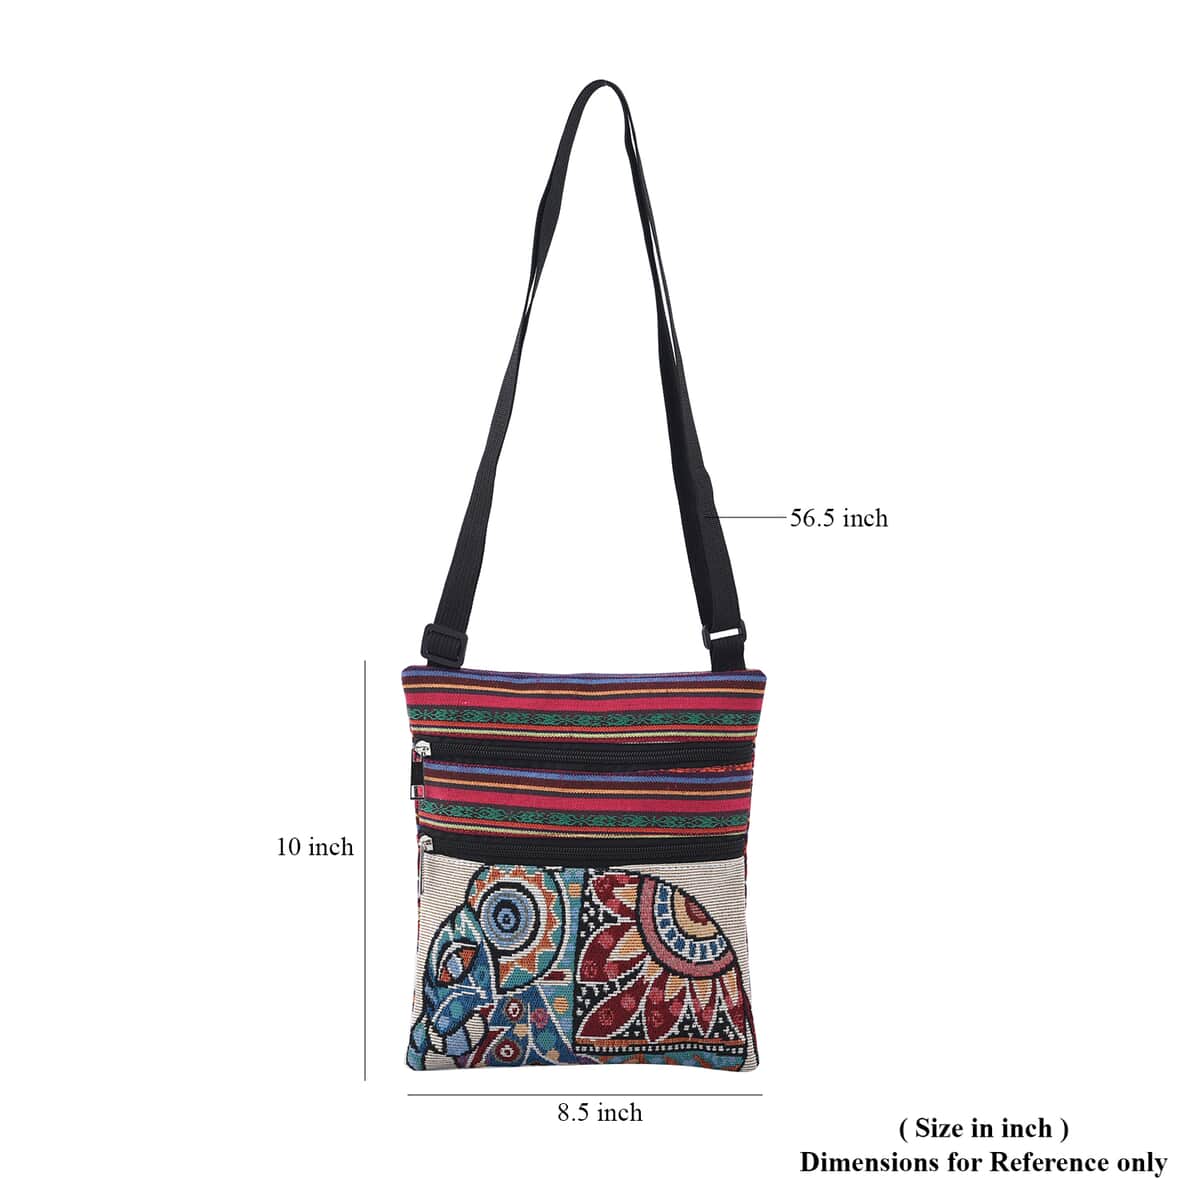 Off White Elephant Jacquard Pattern Crossbody Bag (8.5"x10") with 56.5" Adjustable Shoulder Strap image number 6